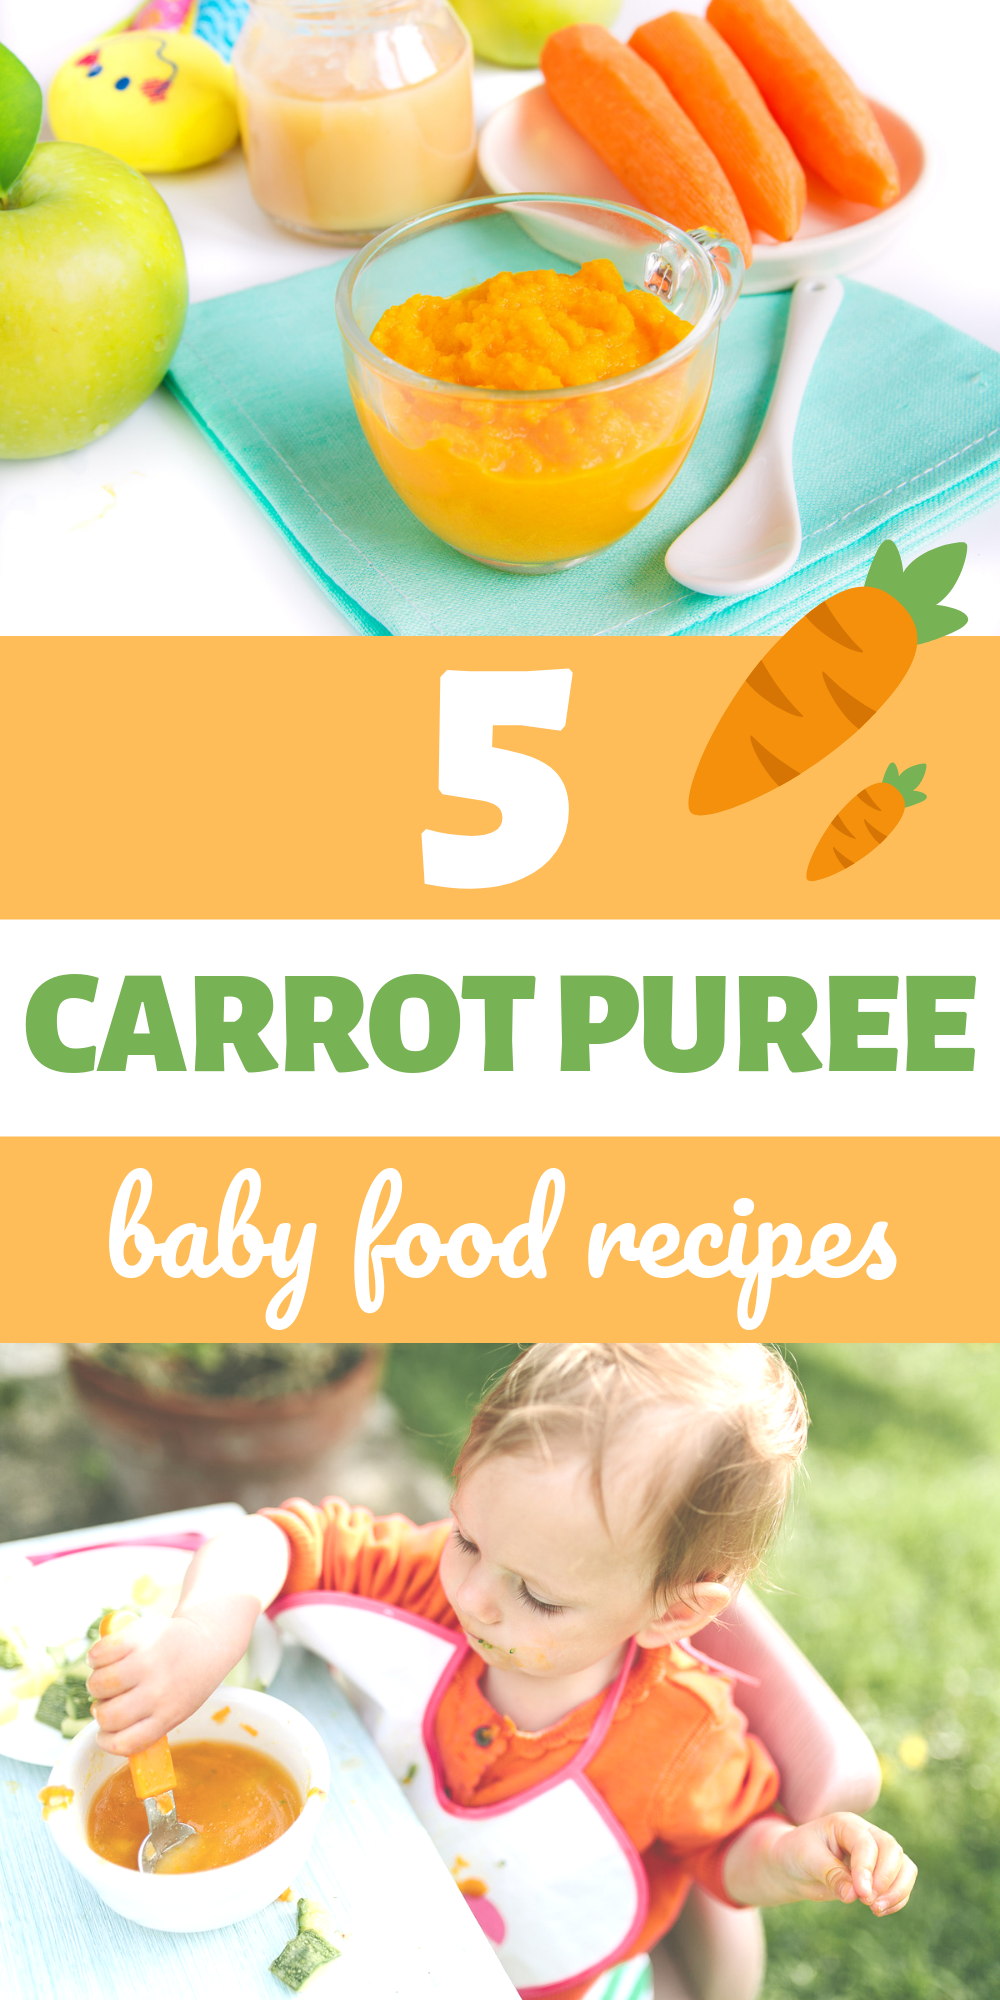 carrot puree baby food recipes